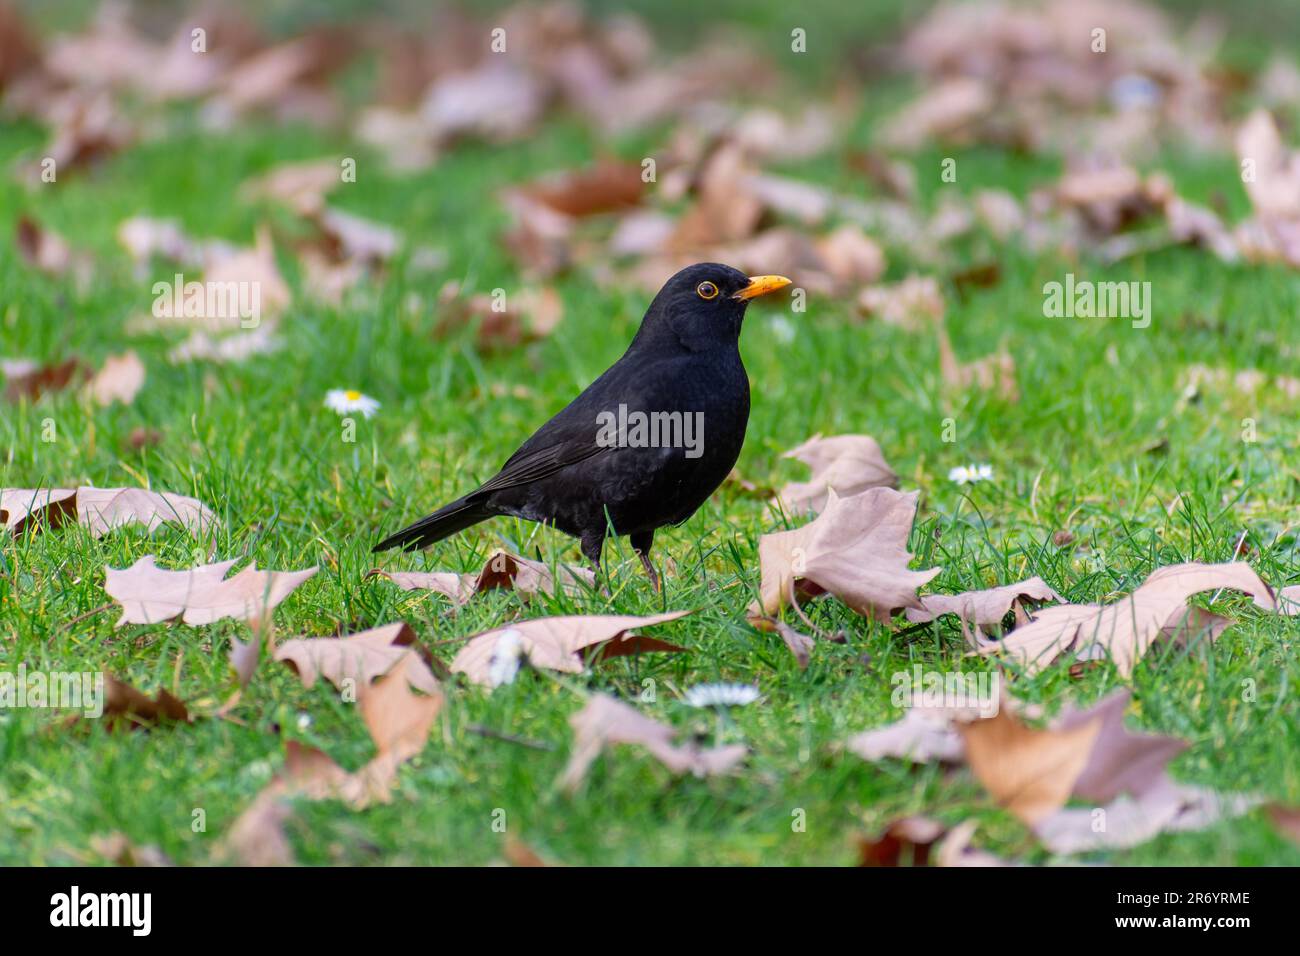 Male blackbird on the grass Stock Photo